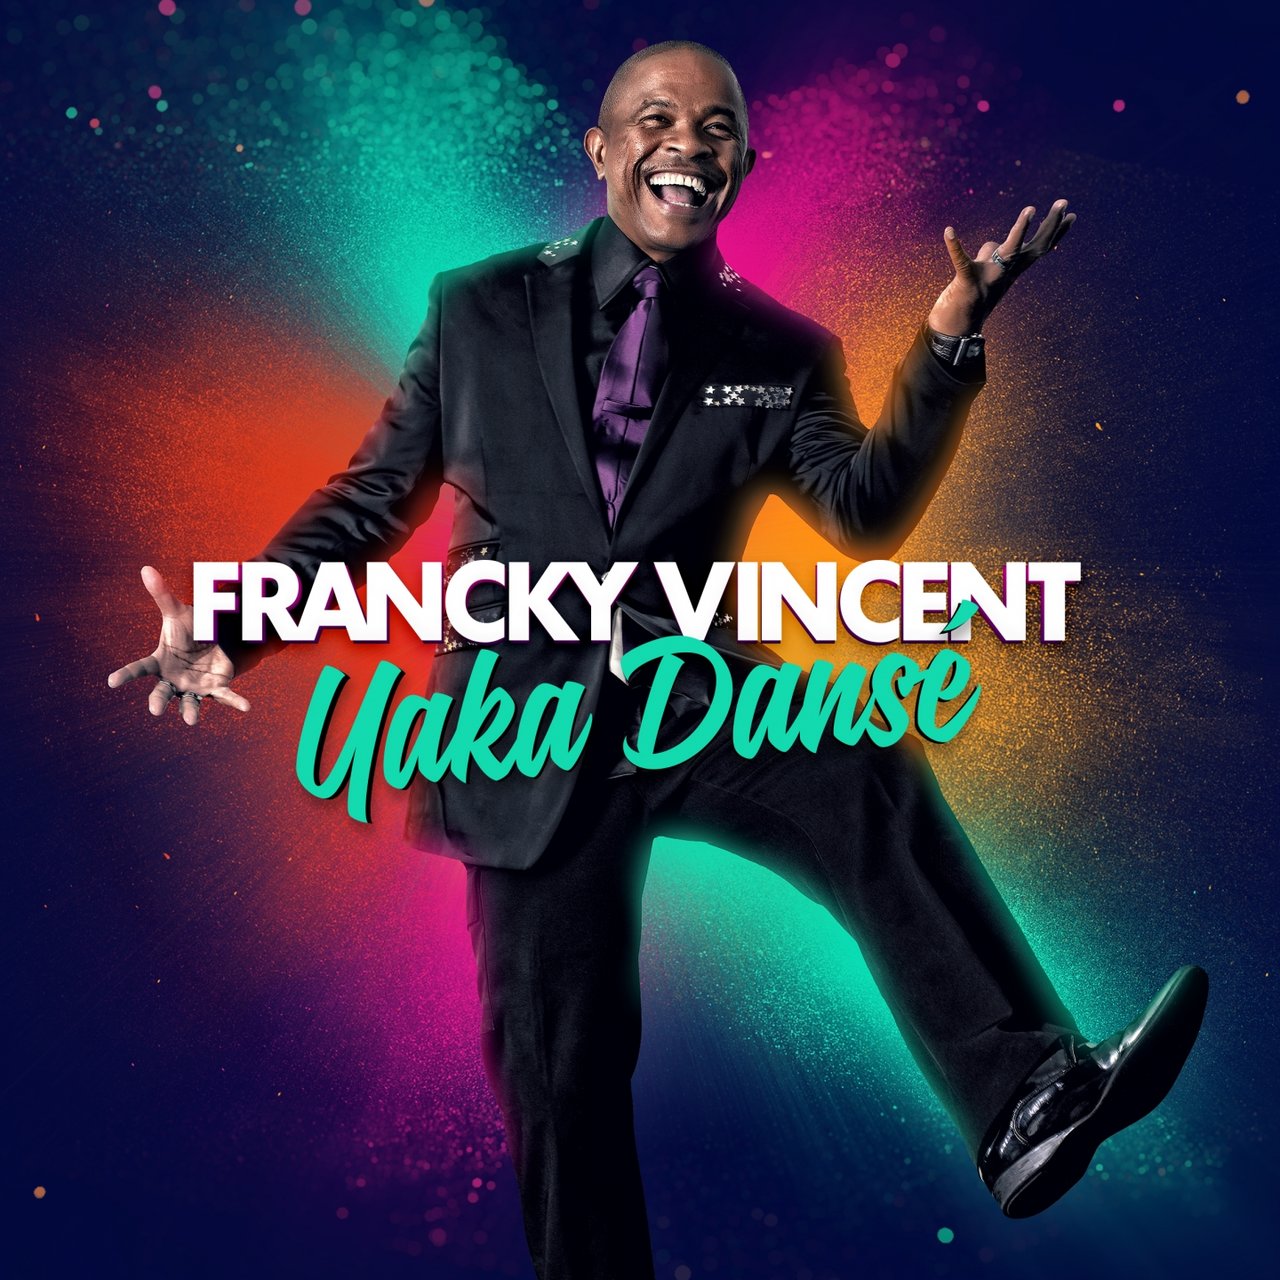 Francky Vincent - Yaka Dansé (Cover)